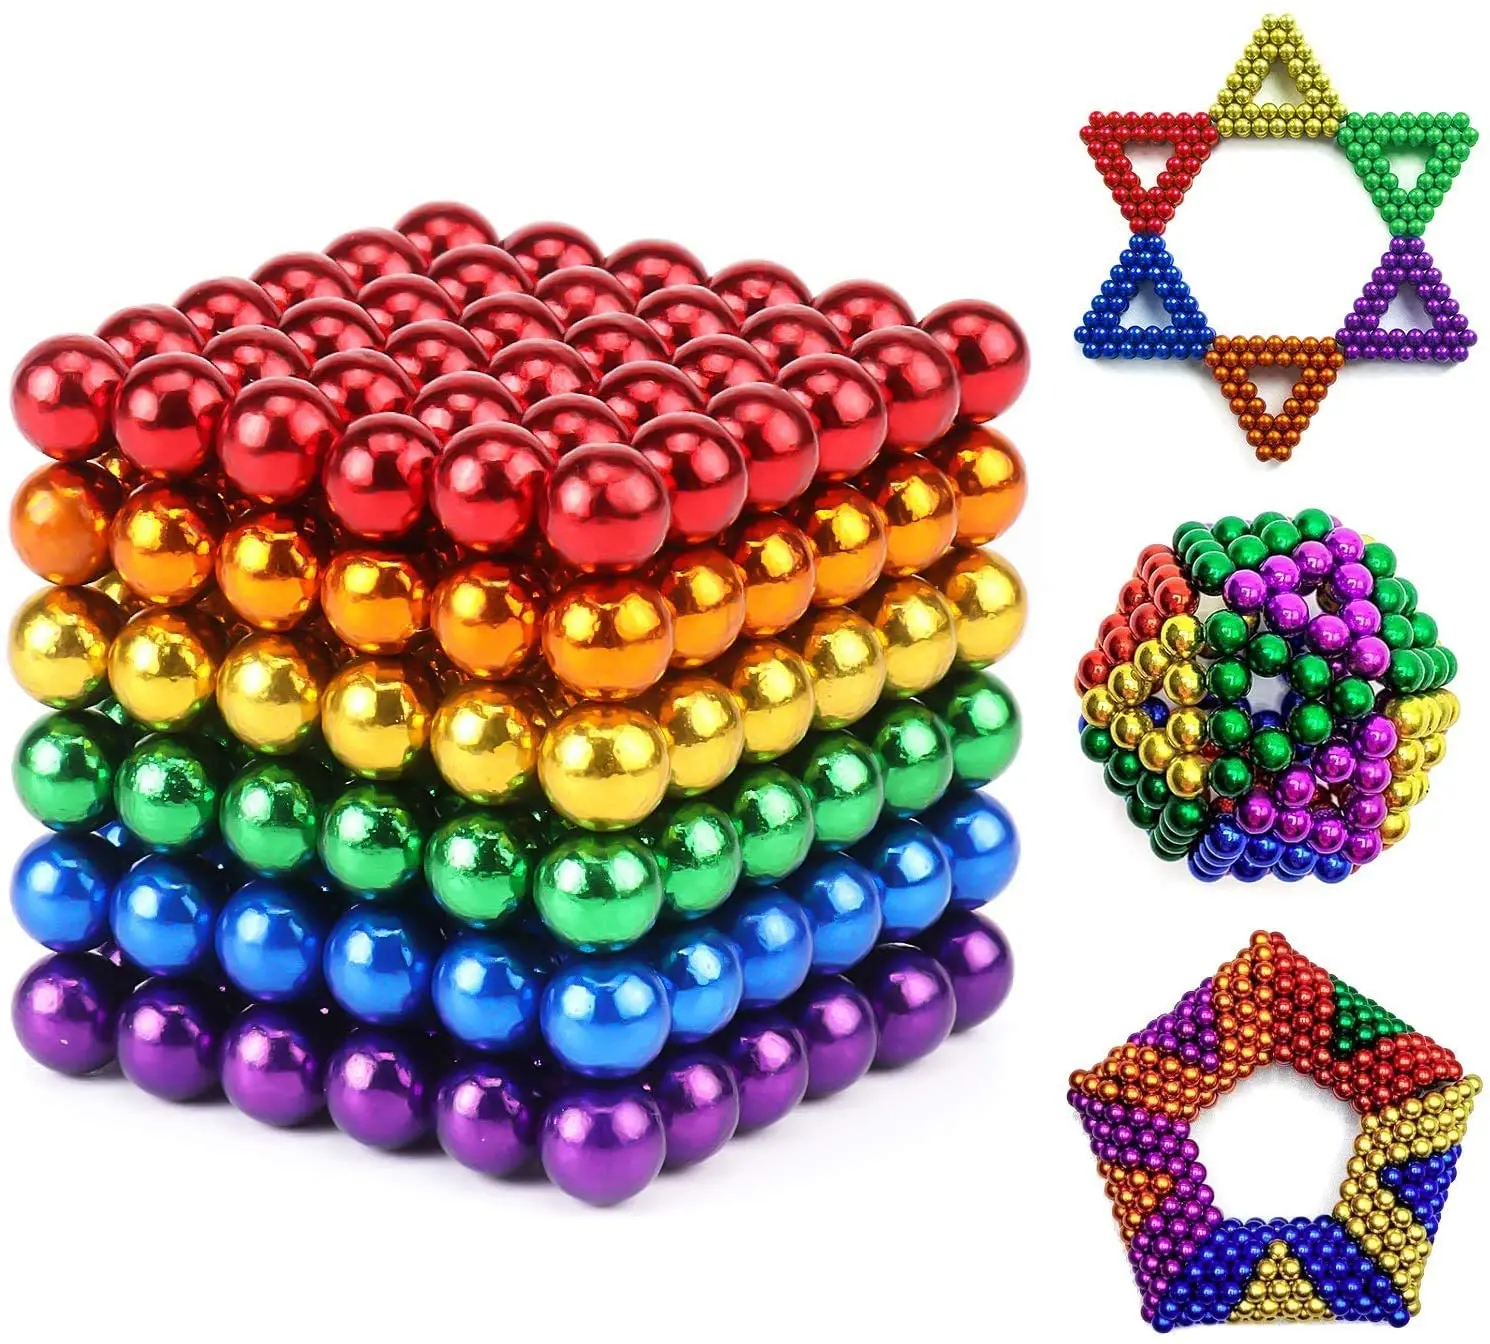 

216pc New Neodymium Metal Magic DIY Magnet Magnetic Balls Blocks 5mm Cube Construction Building Toys Colorfull Arts Crafts Toy